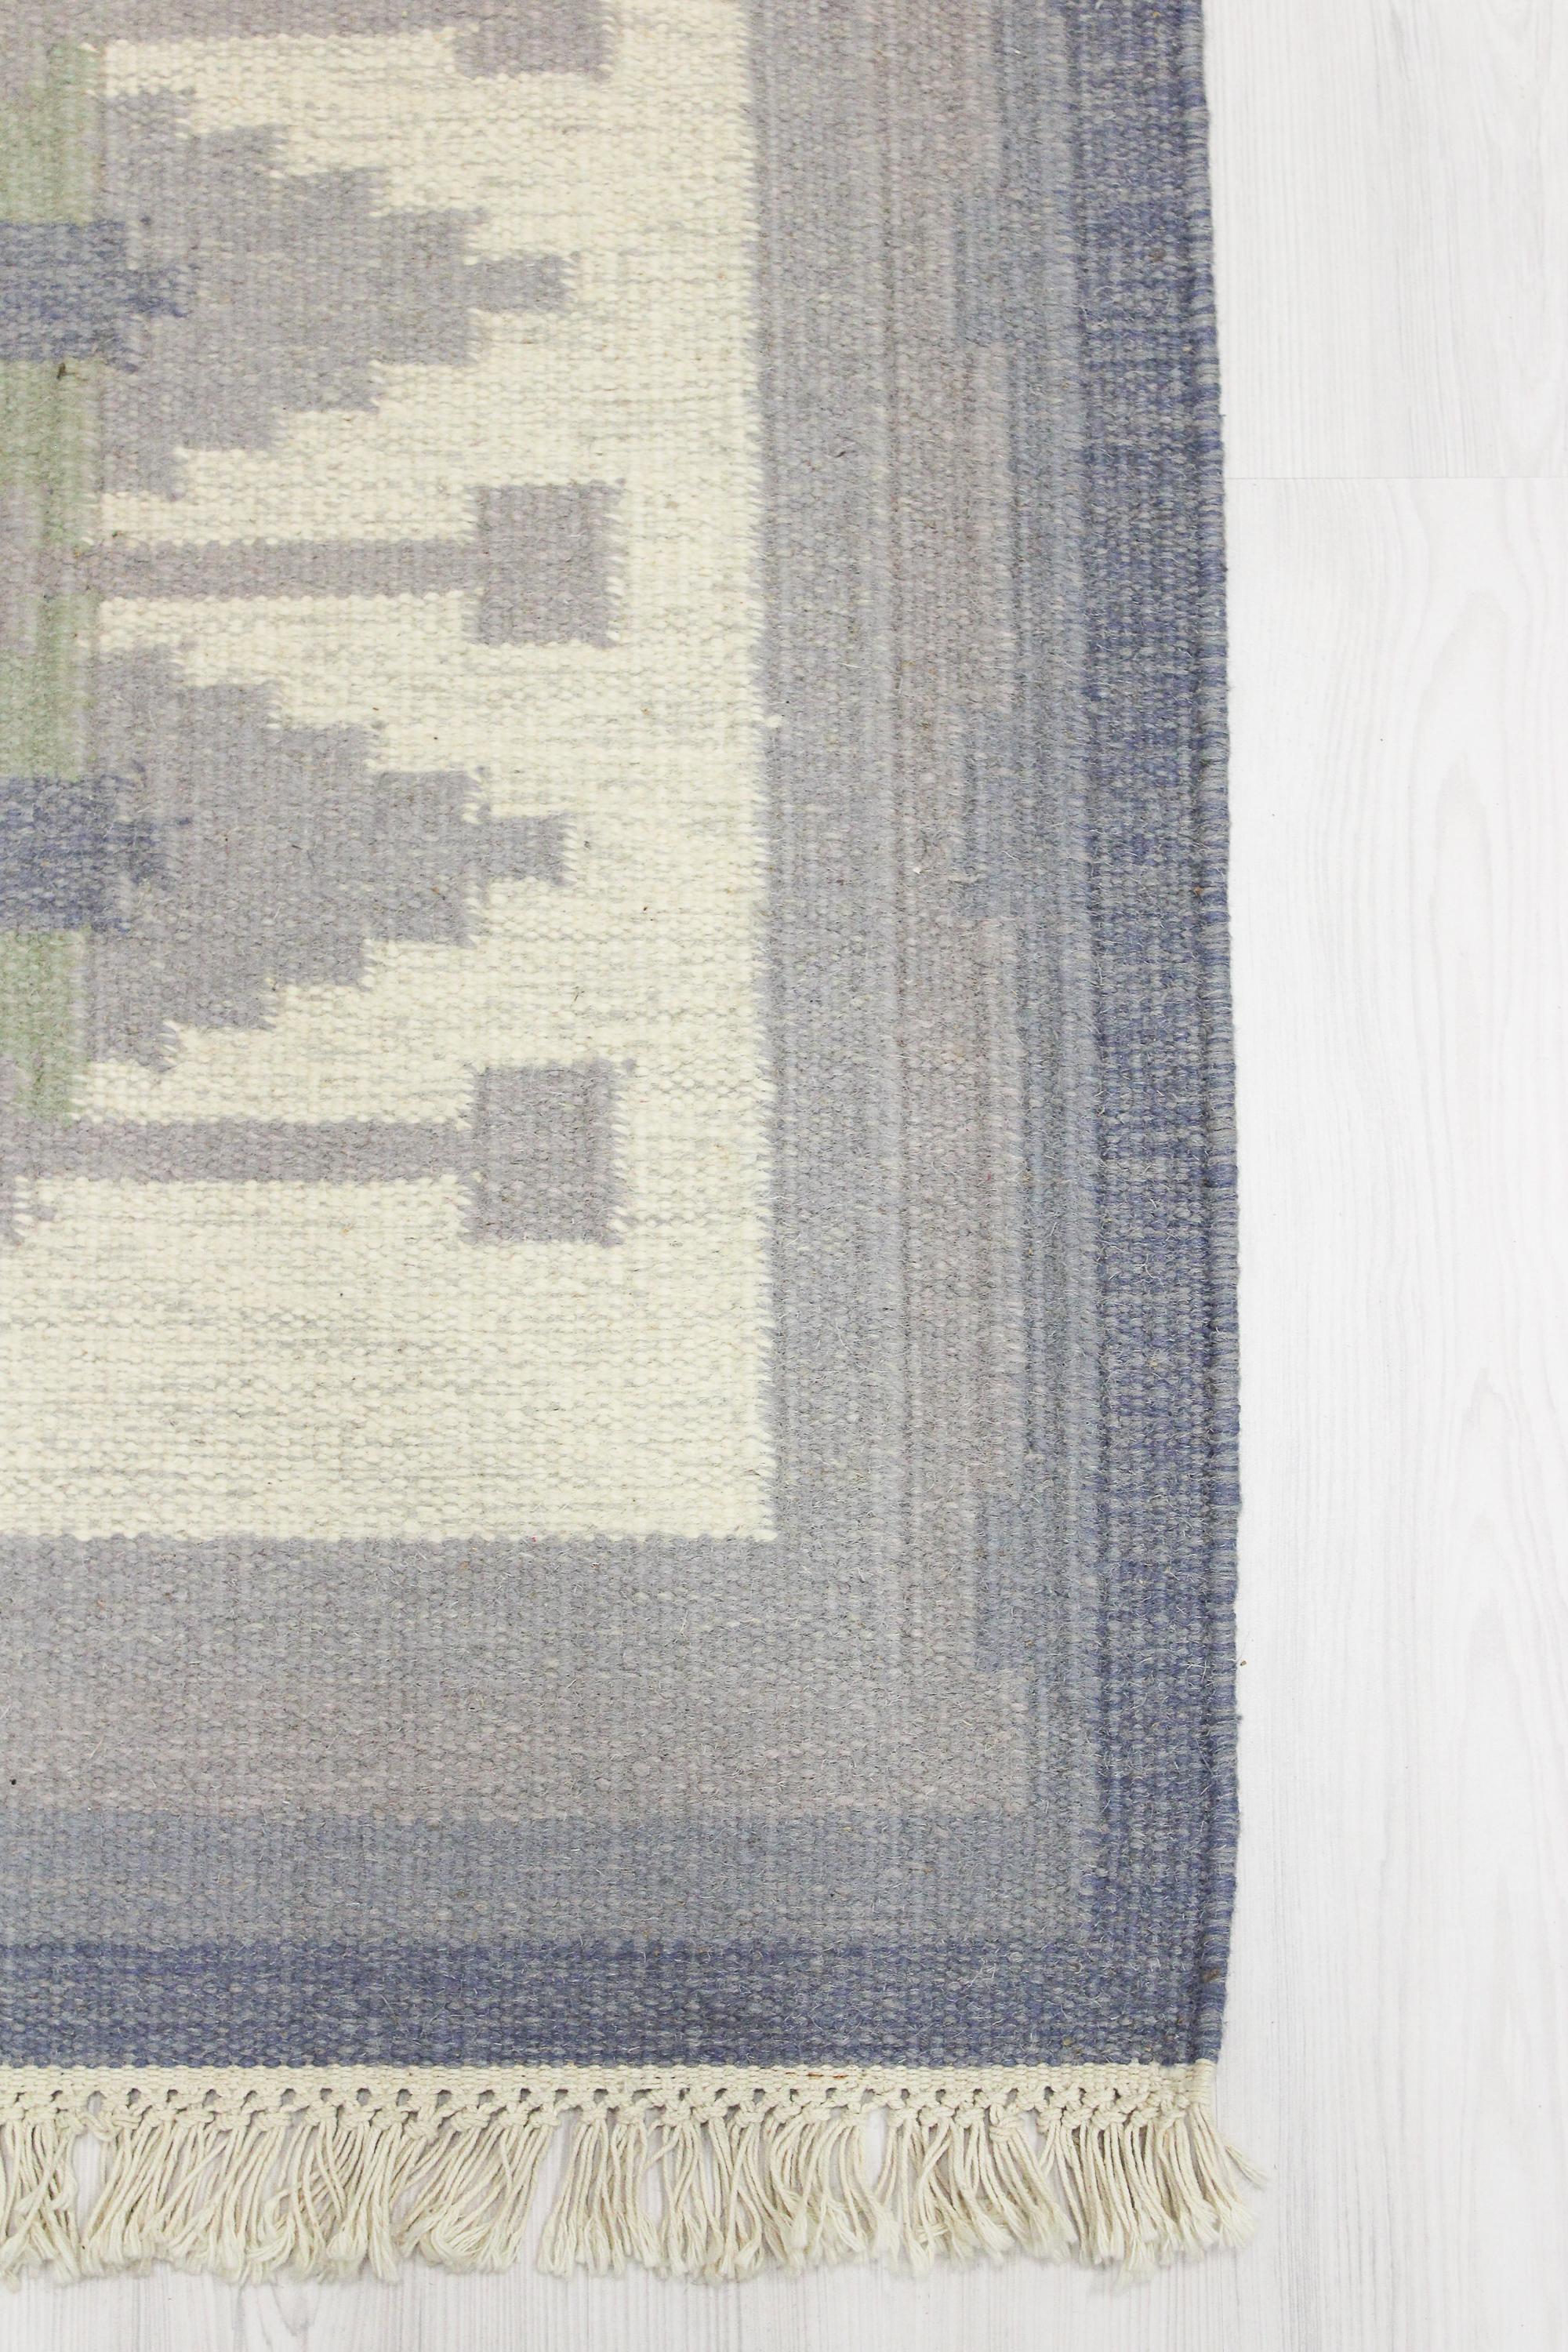 Mid-20th Century Midcentury Swedish Gallery Flat-Weave Carpet, 1950s